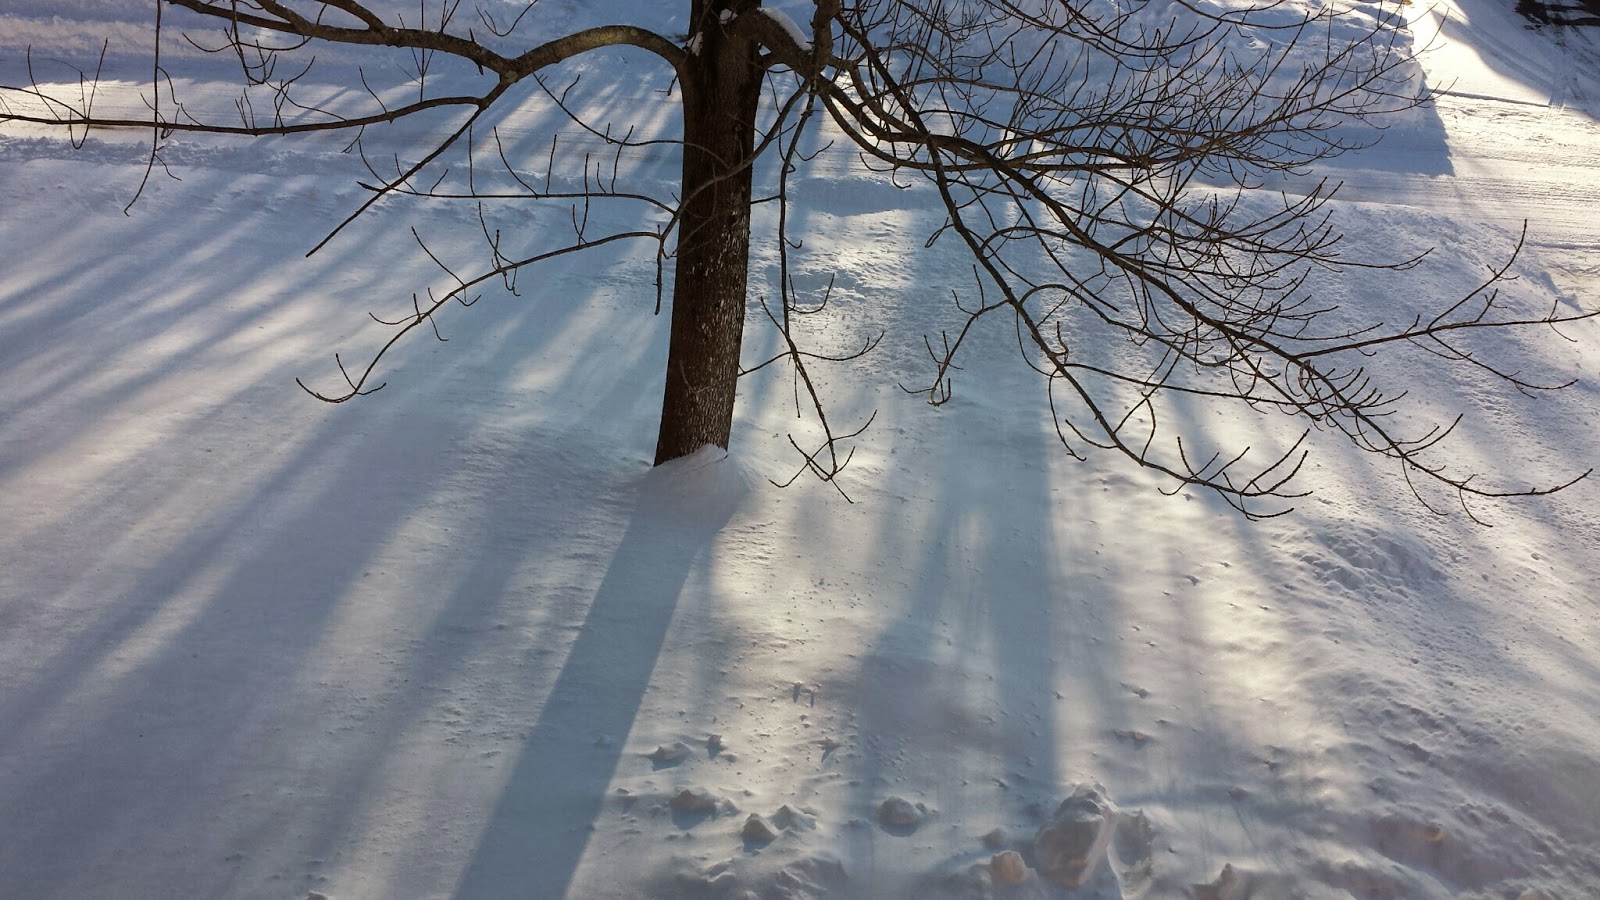 sunshine, shadows and snow